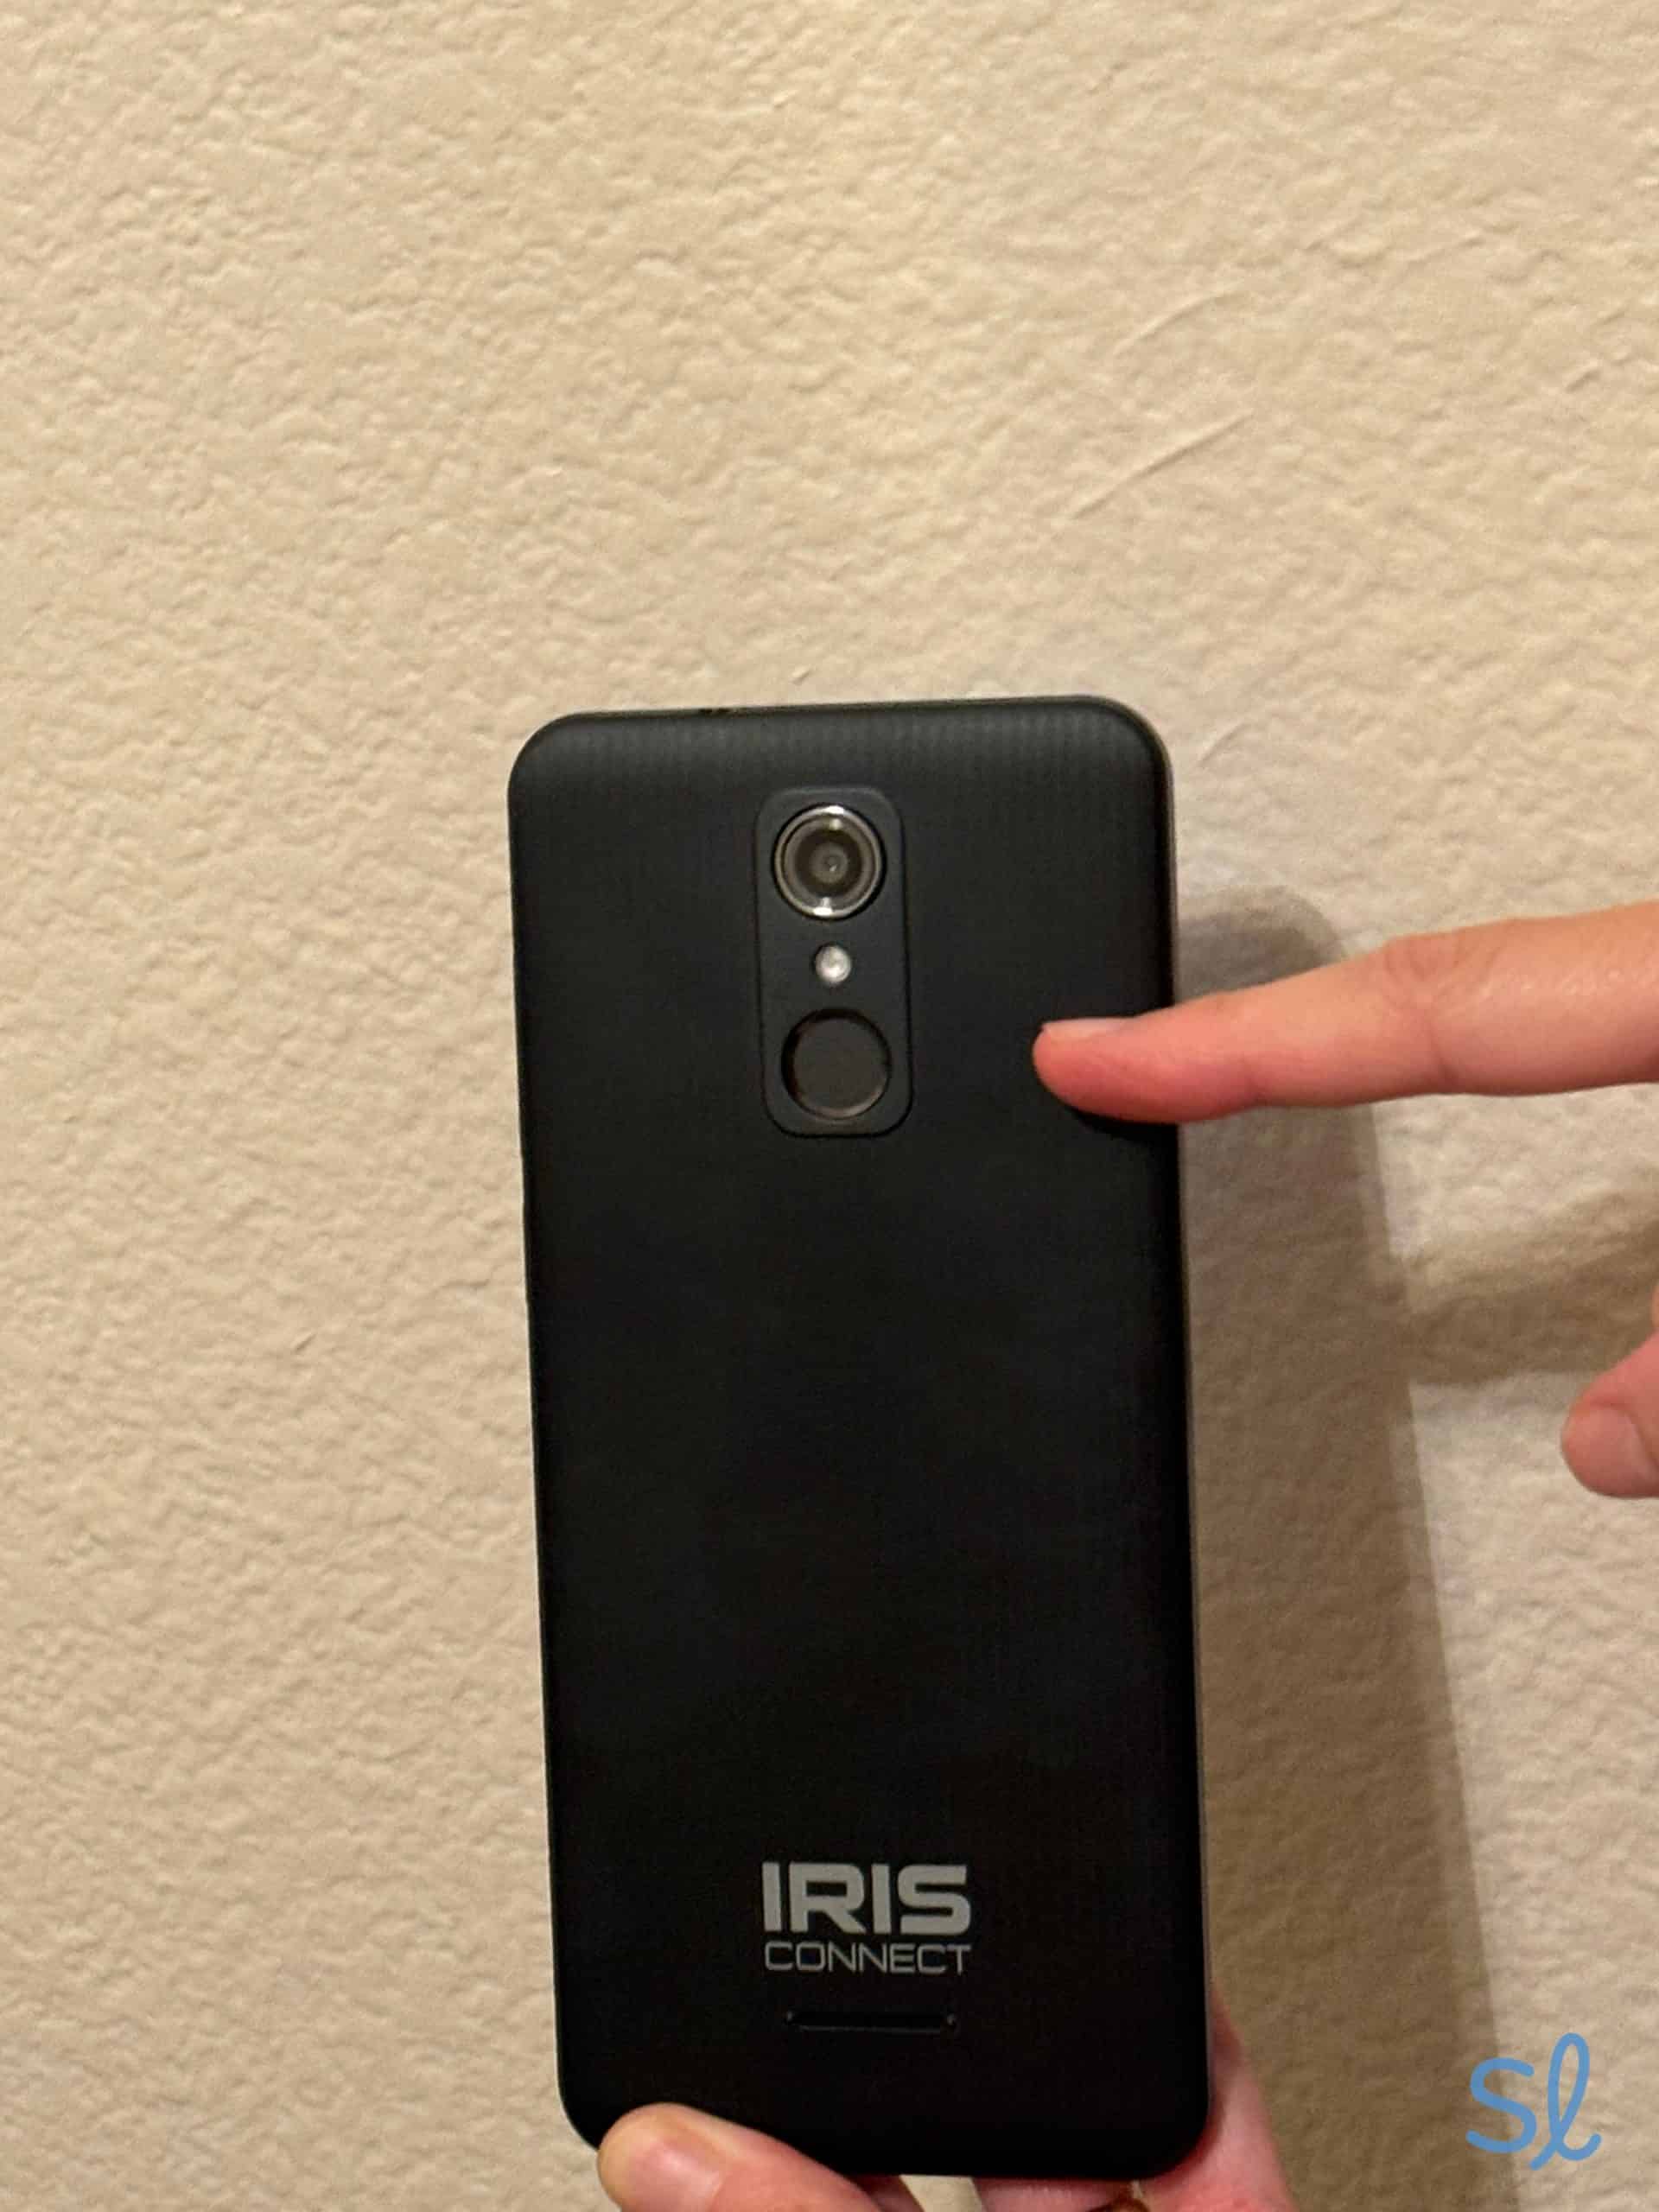 The IRIS Connect's fingerprint sensor